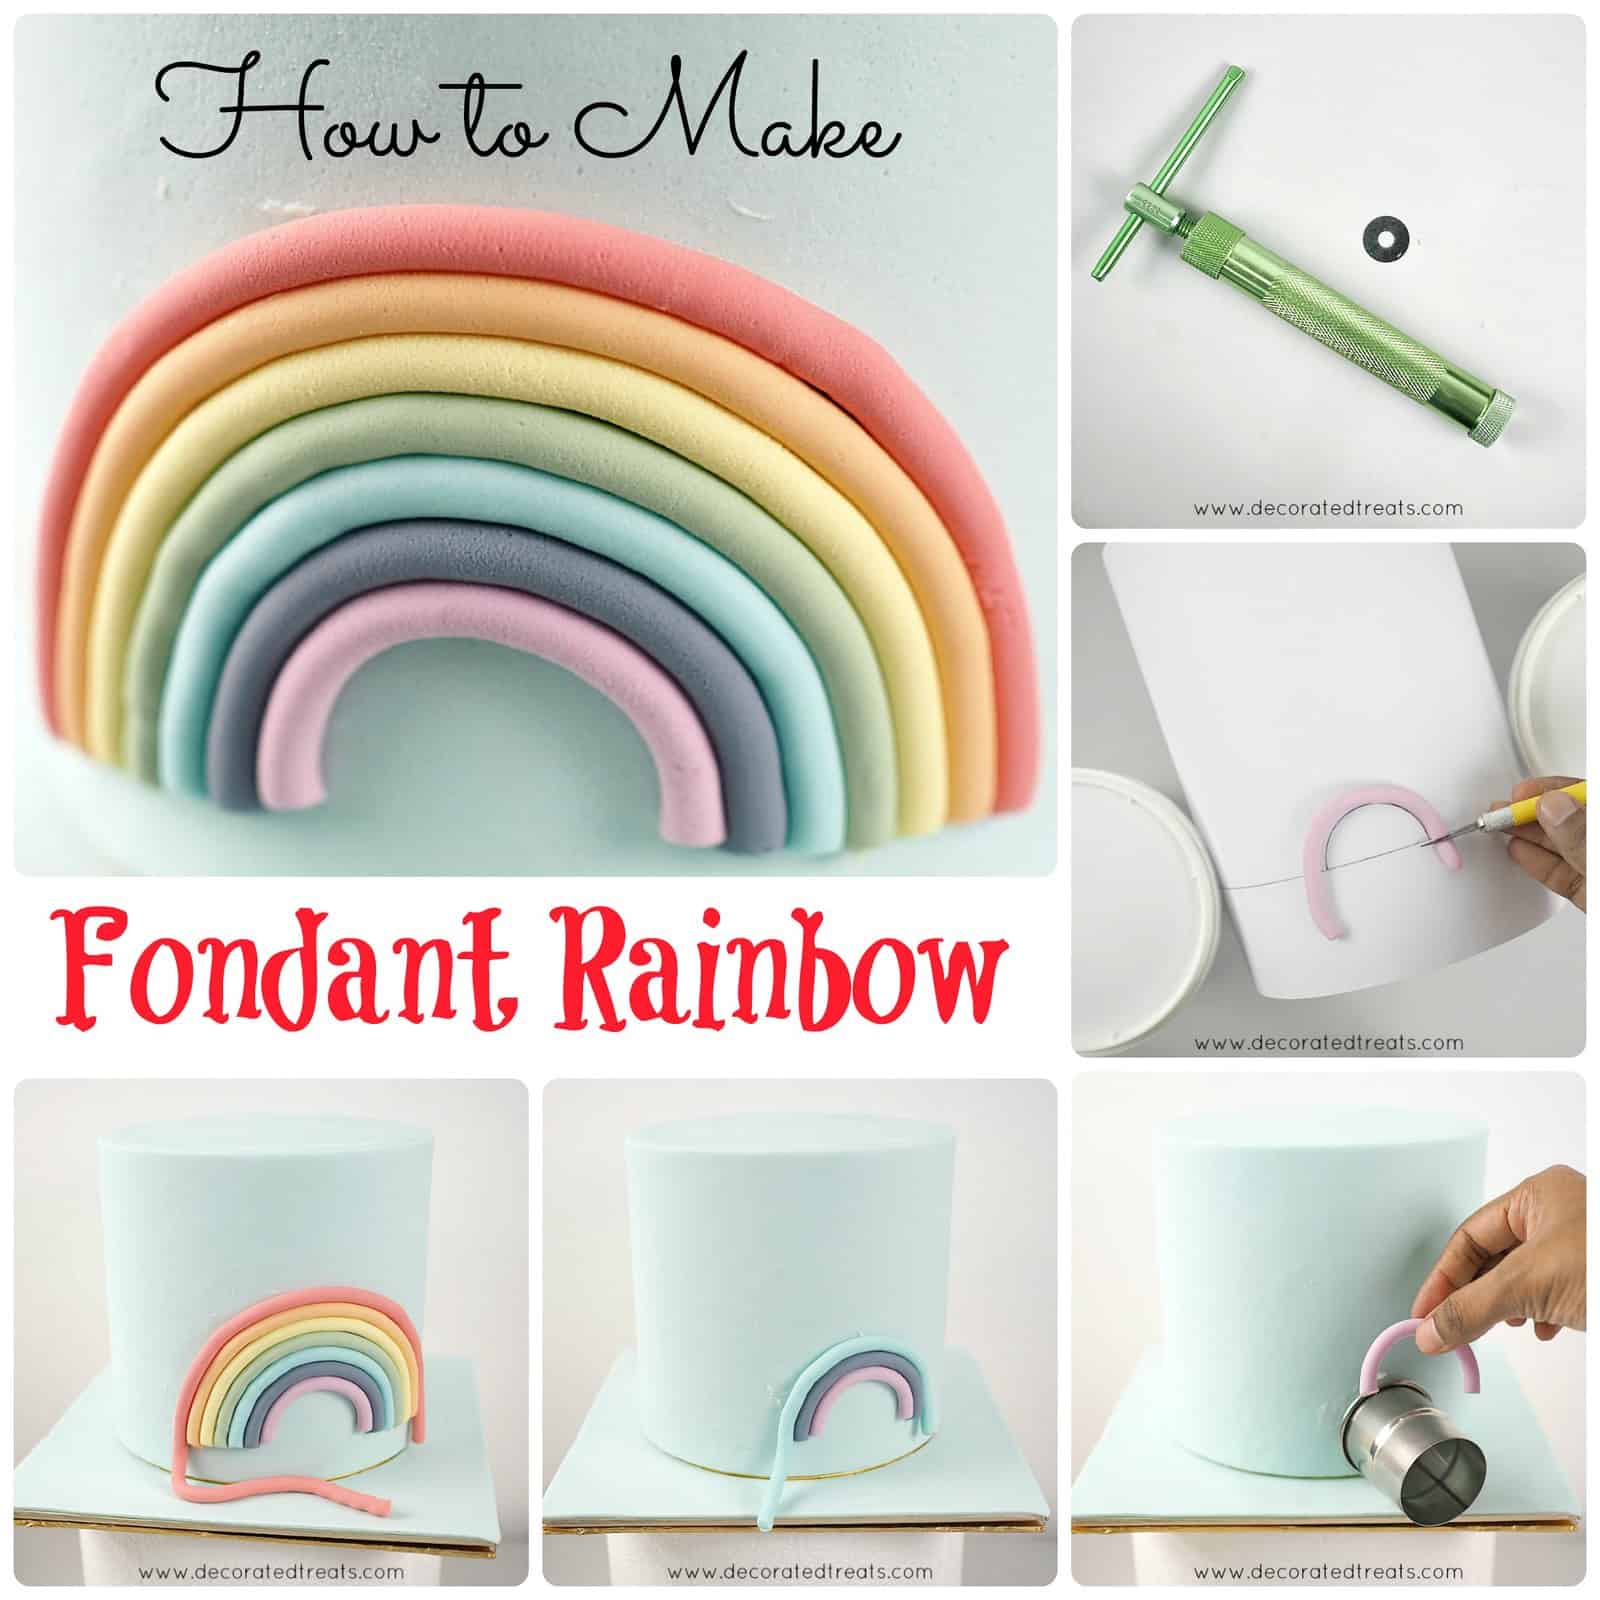 Poster for making fondant rainbow